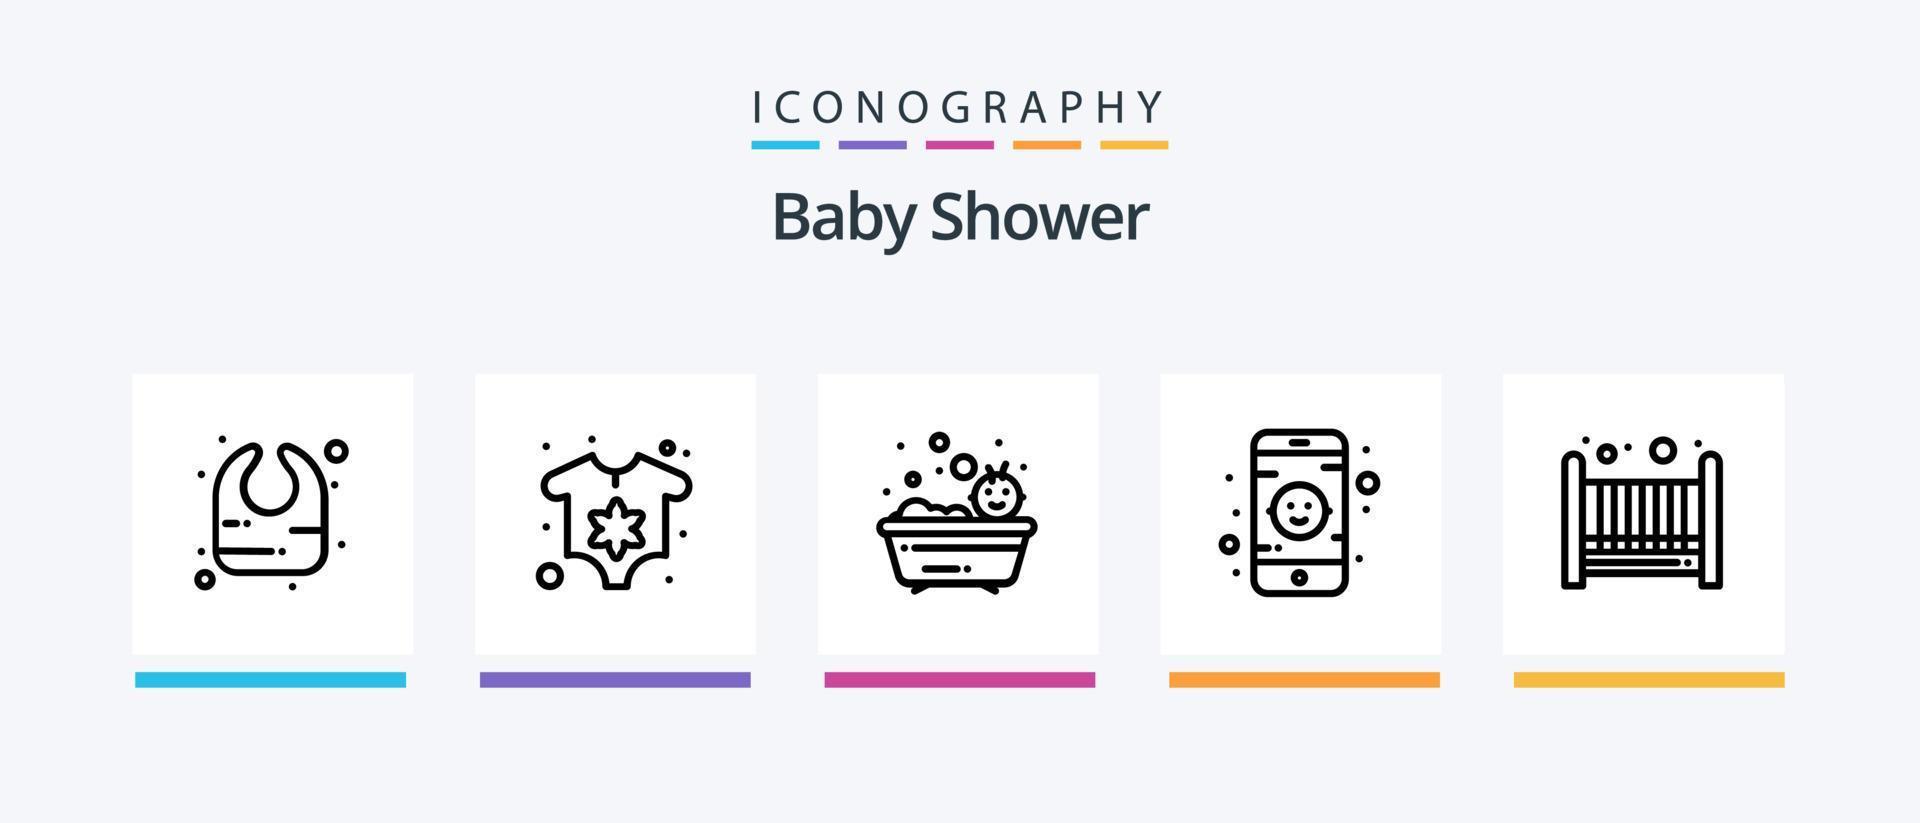 bambino doccia linea 5 icona imballare Compreso . manichino. bambino. bambino. piramide. creativo icone design vettore